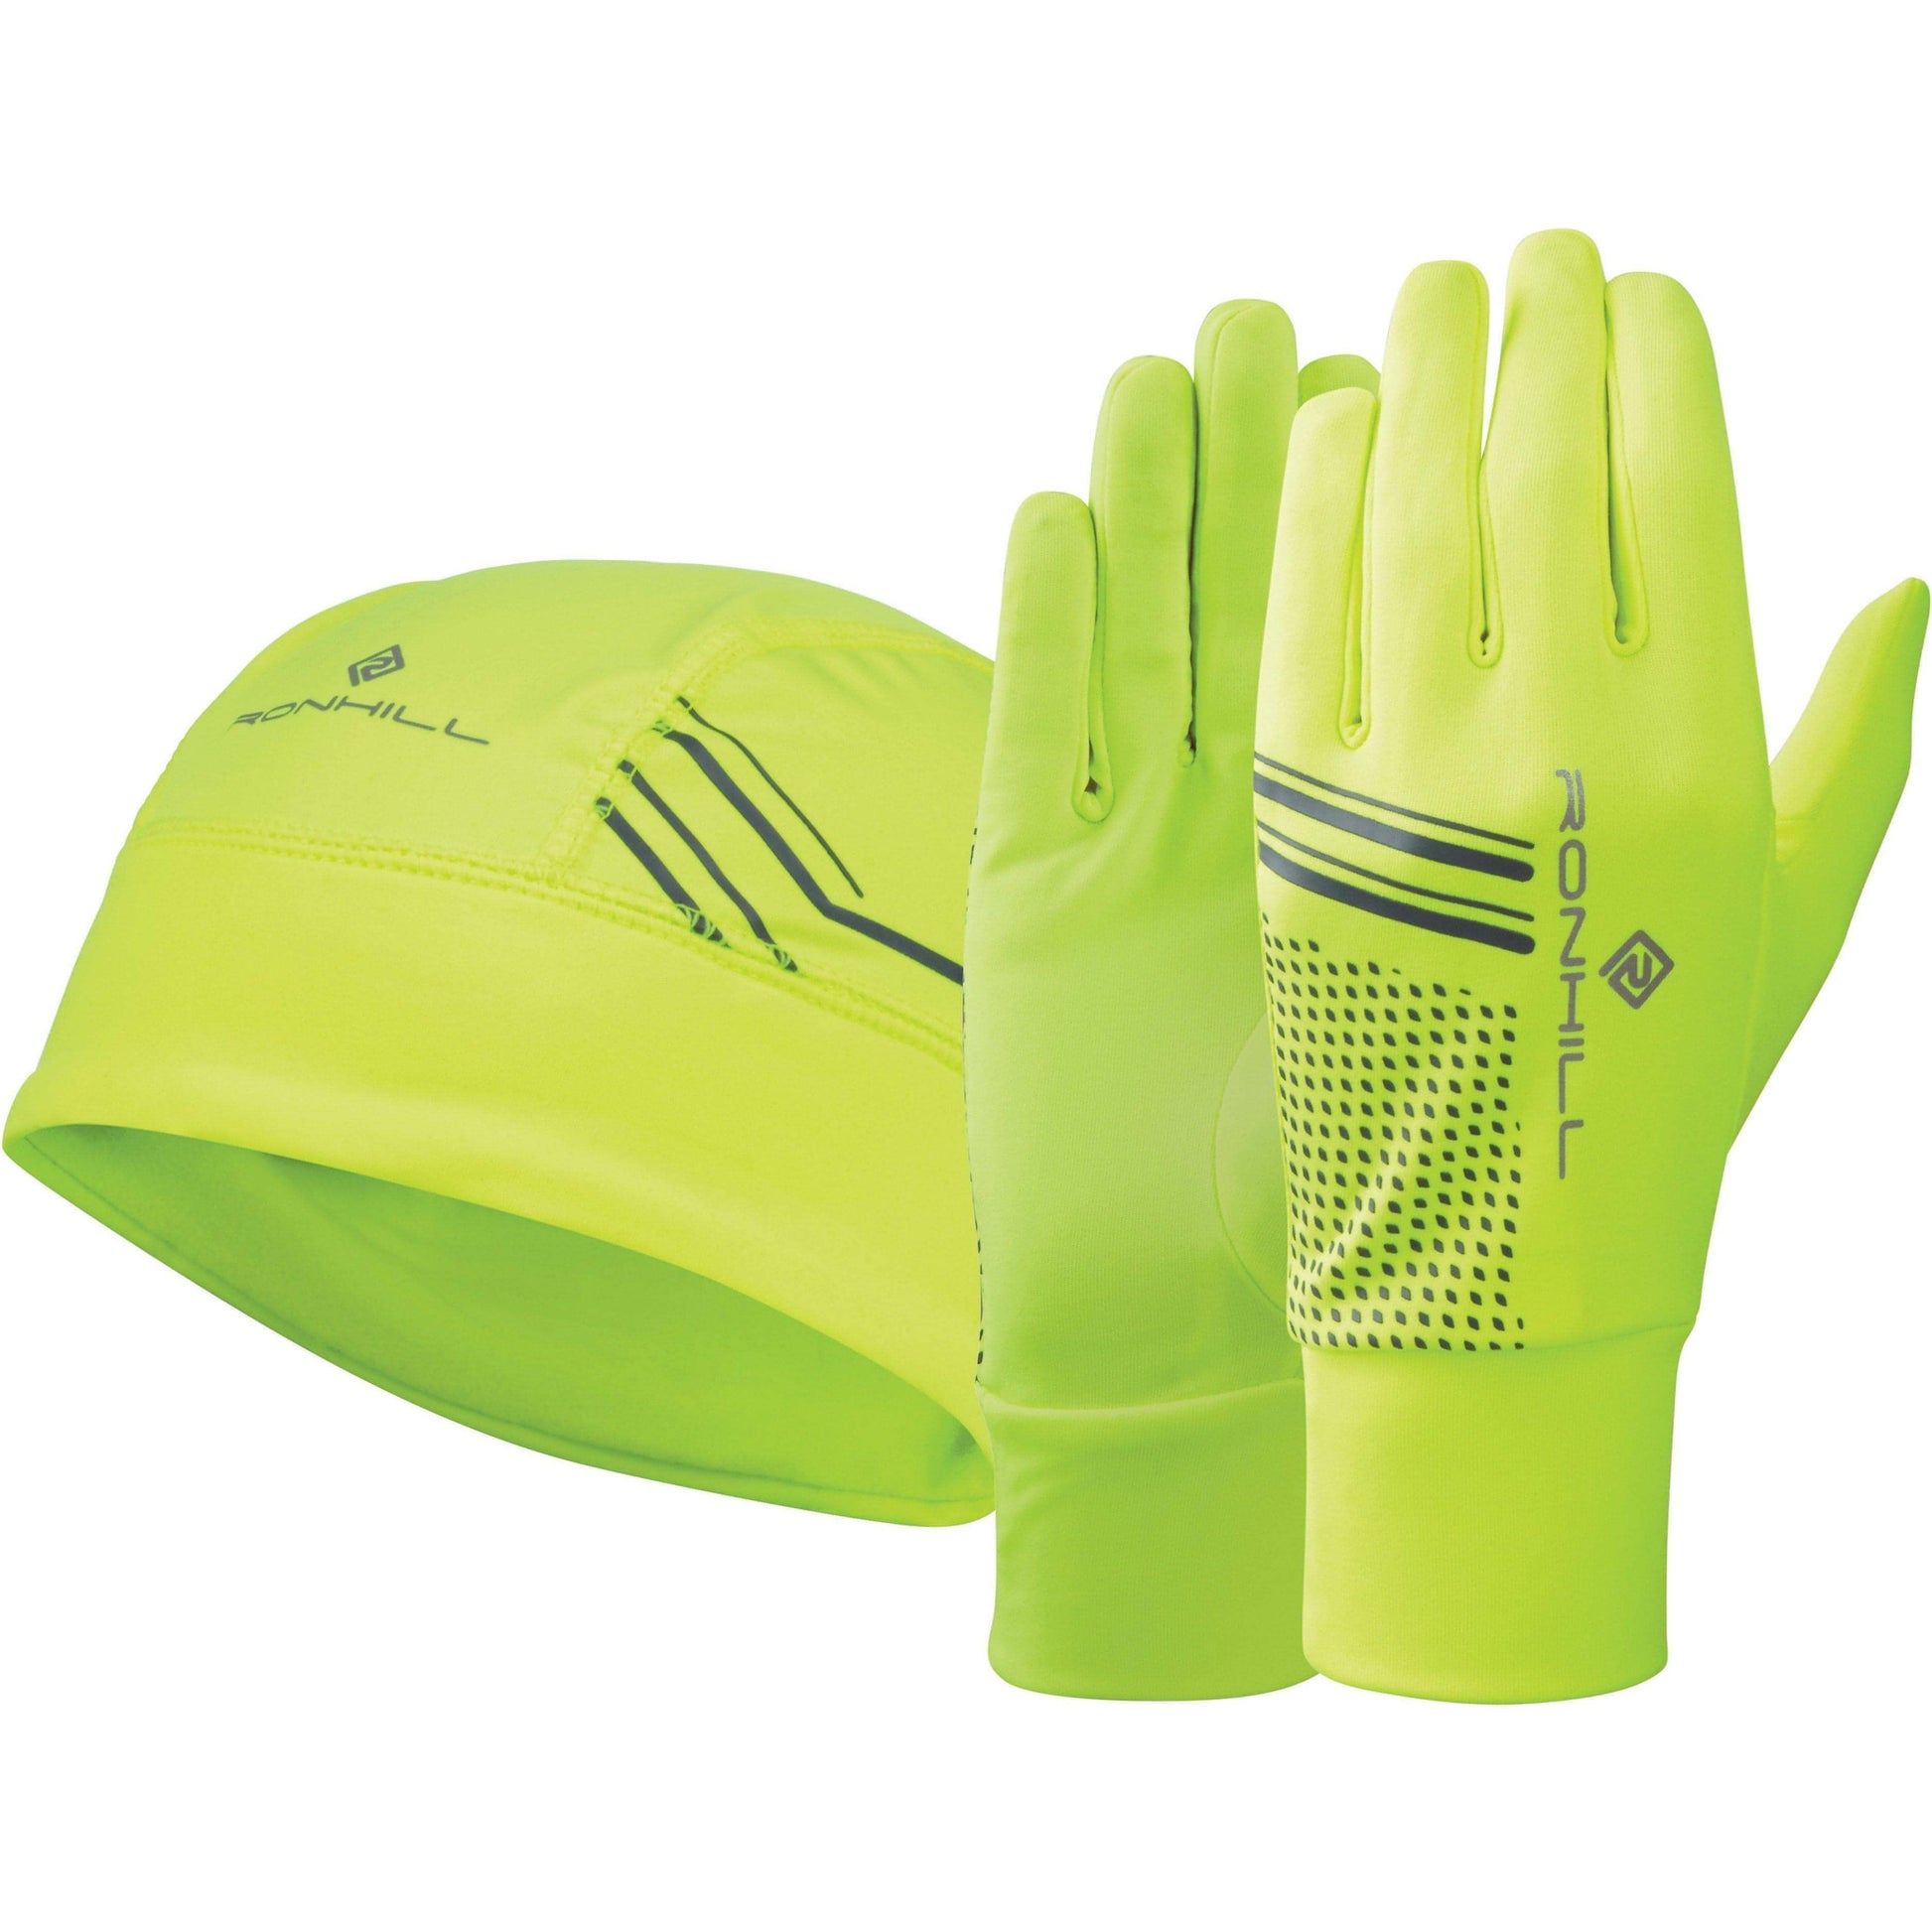 Ronhill Beanie And Glove Set - Yellow 5051508460051 - Start Fitness